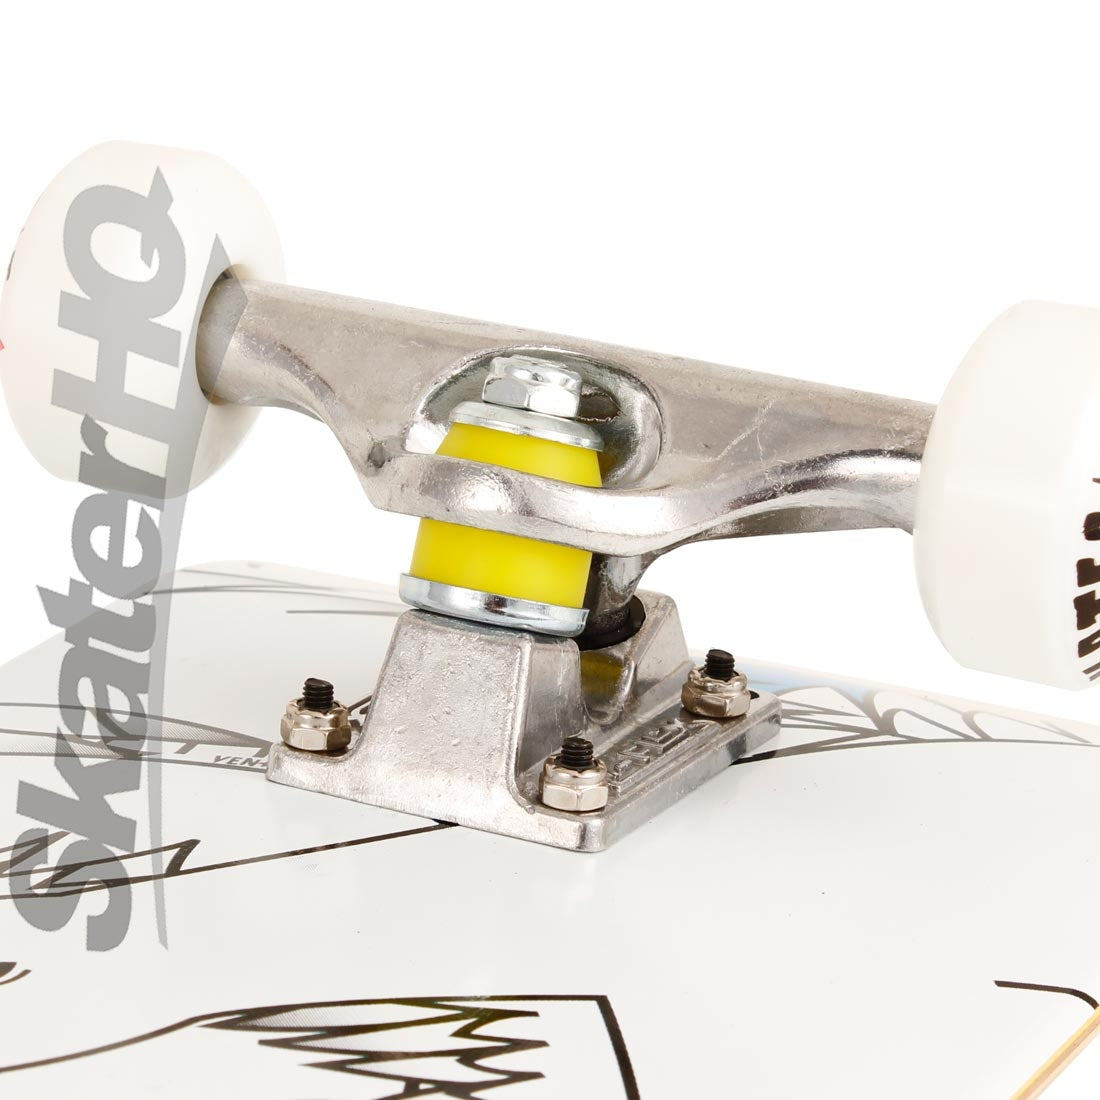 Skater HQ Seagulls 7.25 Mini S Complete Skateboard Completes Modern Street